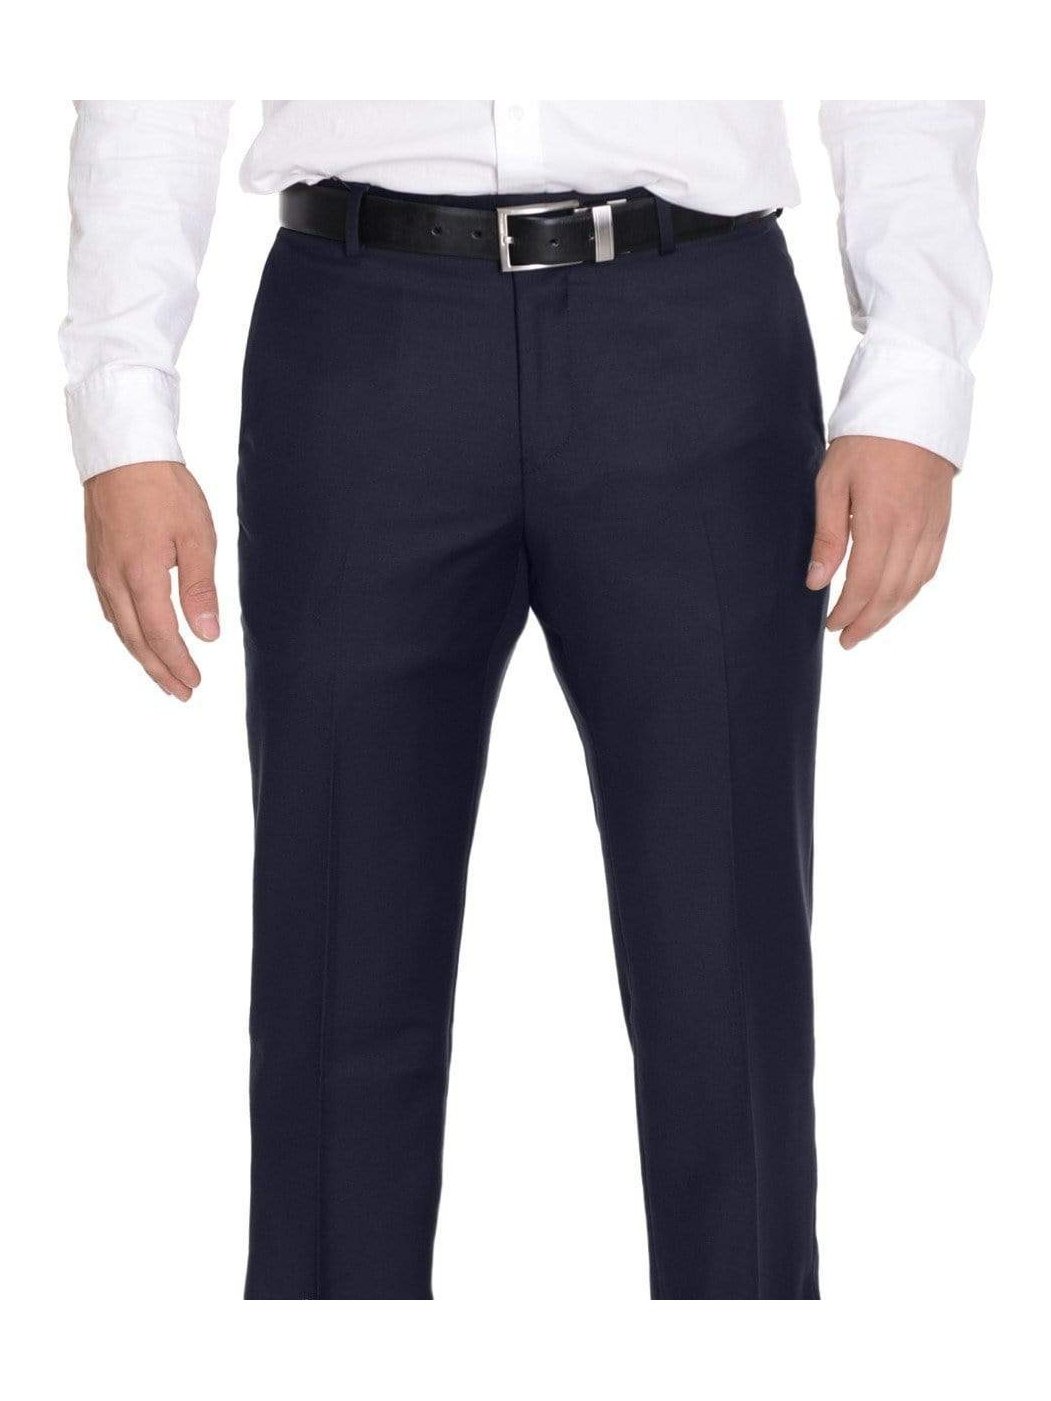 Raphael PANTS 28X29 Raphael Extra Slim Fit Solid Navy Blue Flat Front Washable Dress Pants